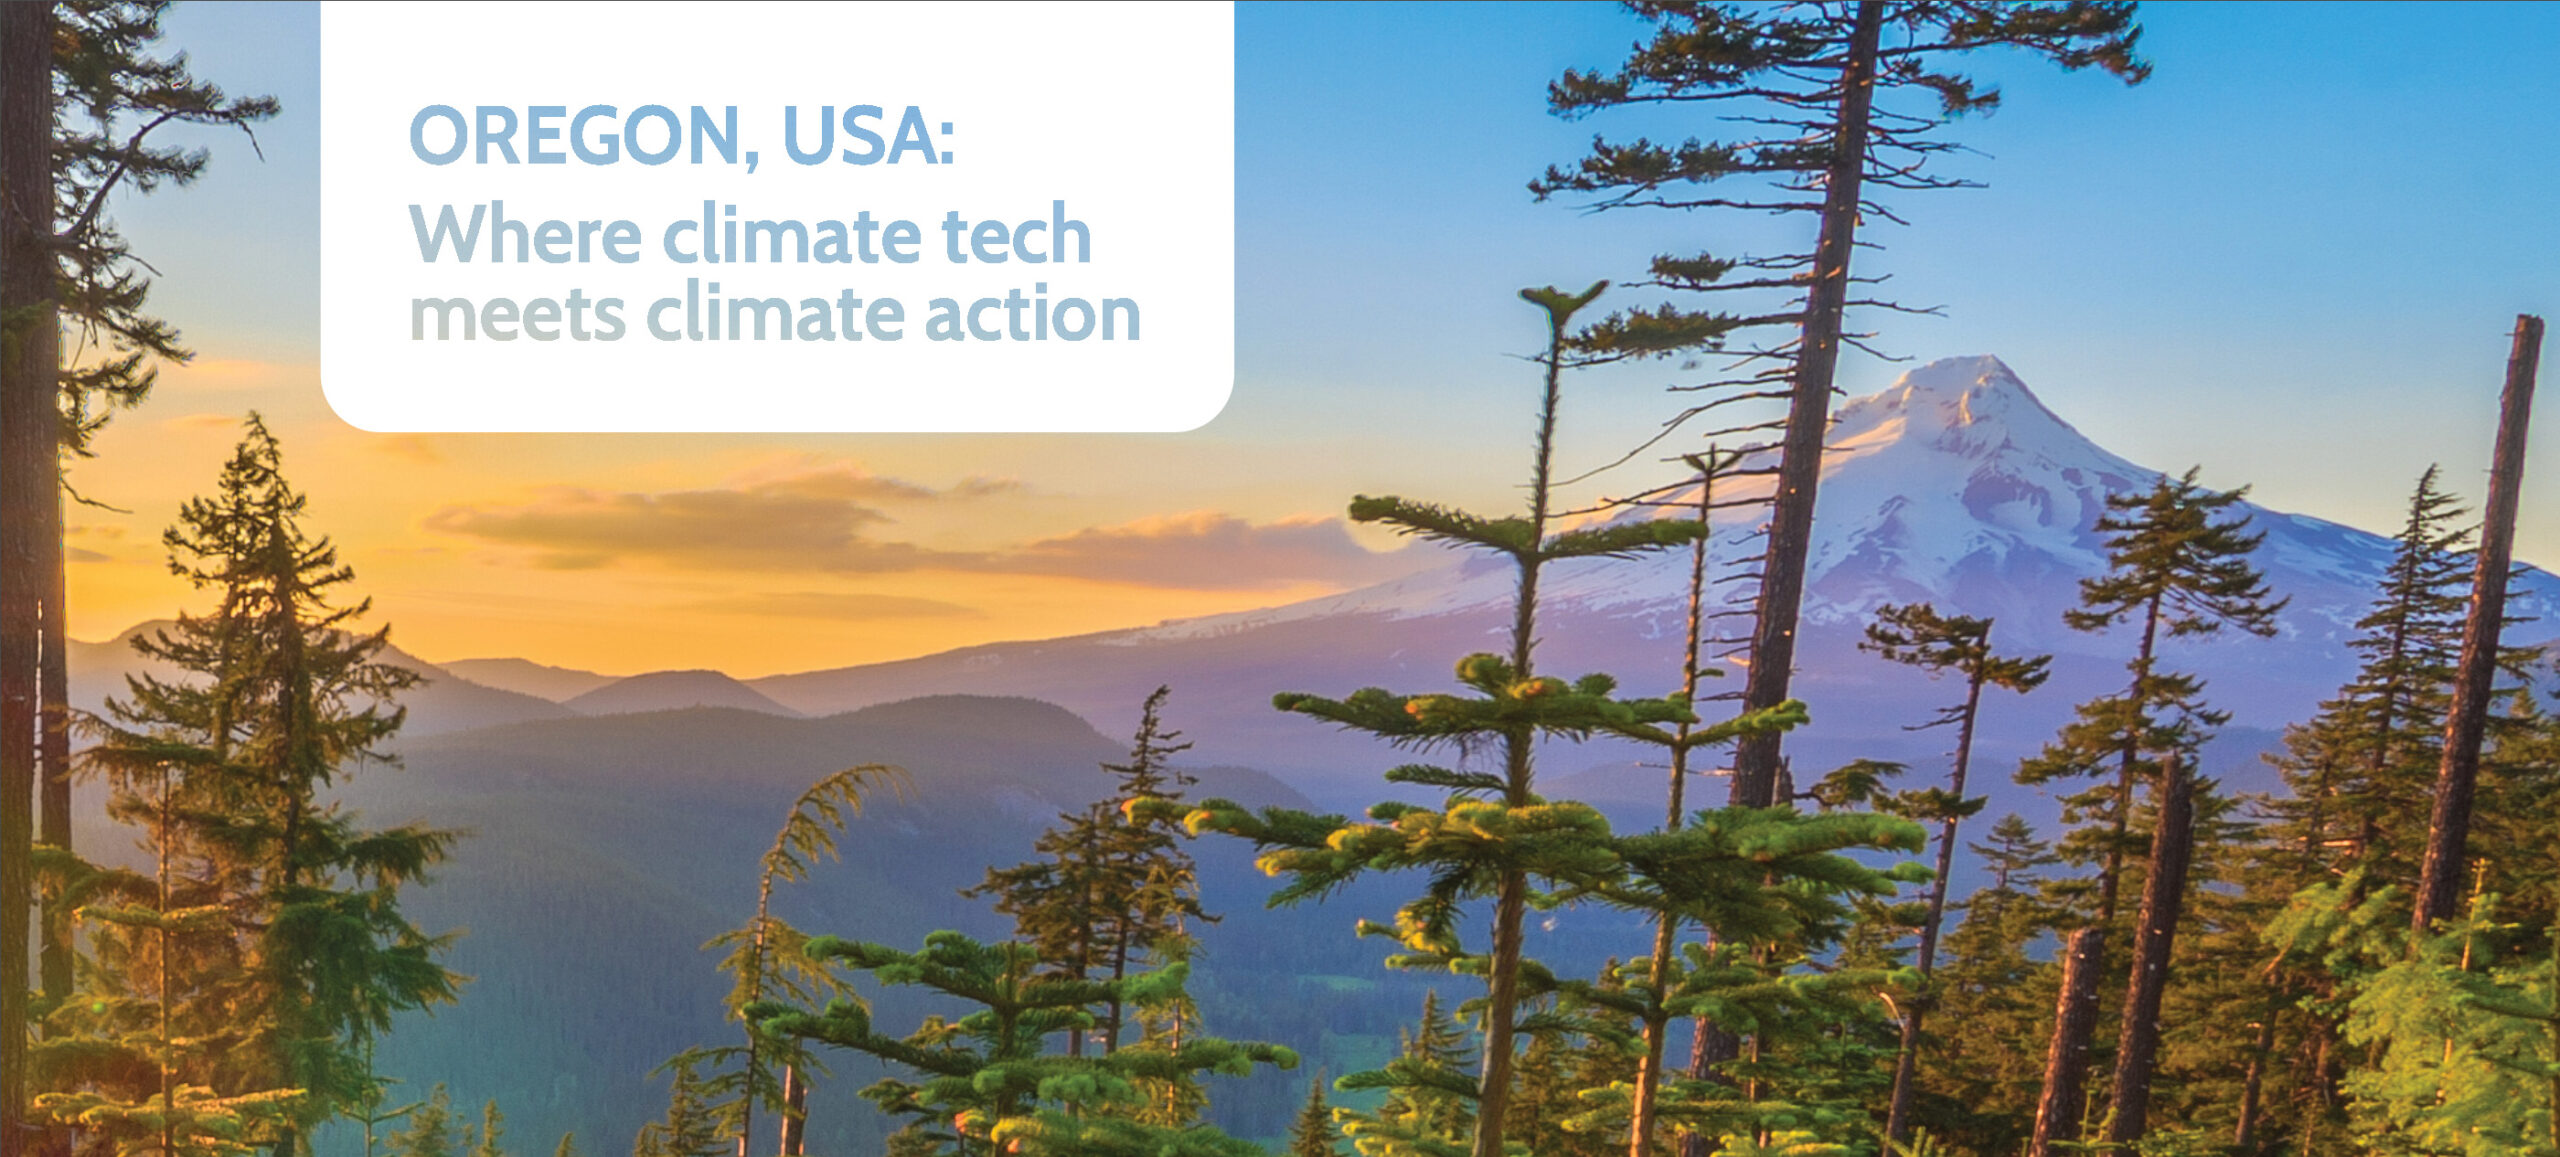 Oregon, USA: where climate tech meets climate action